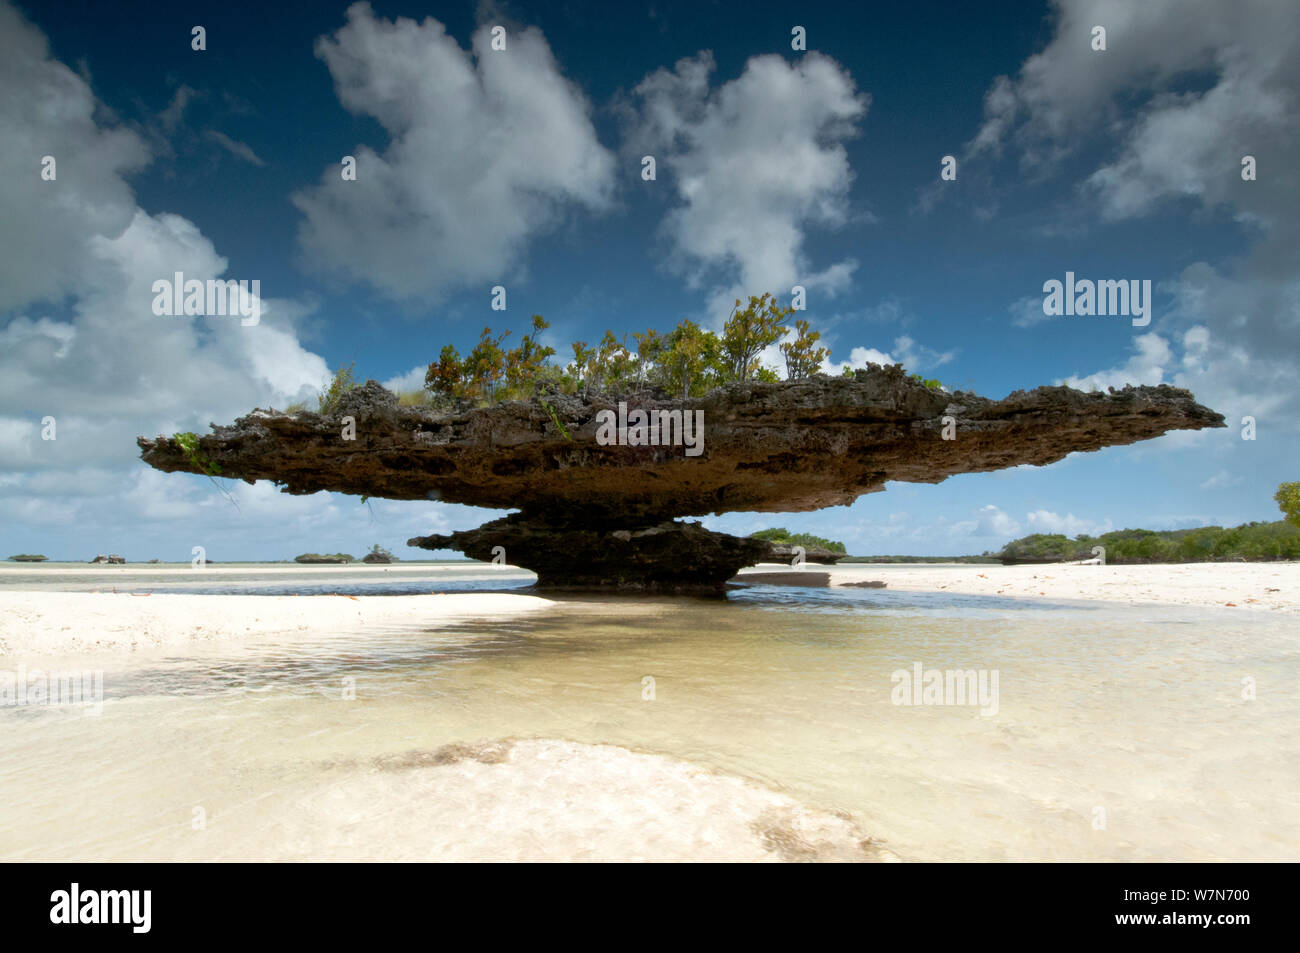 Champignon coral limestone formation on beach, Aldabra Atoll, Seychelles, Indian Oceans Stock Photo